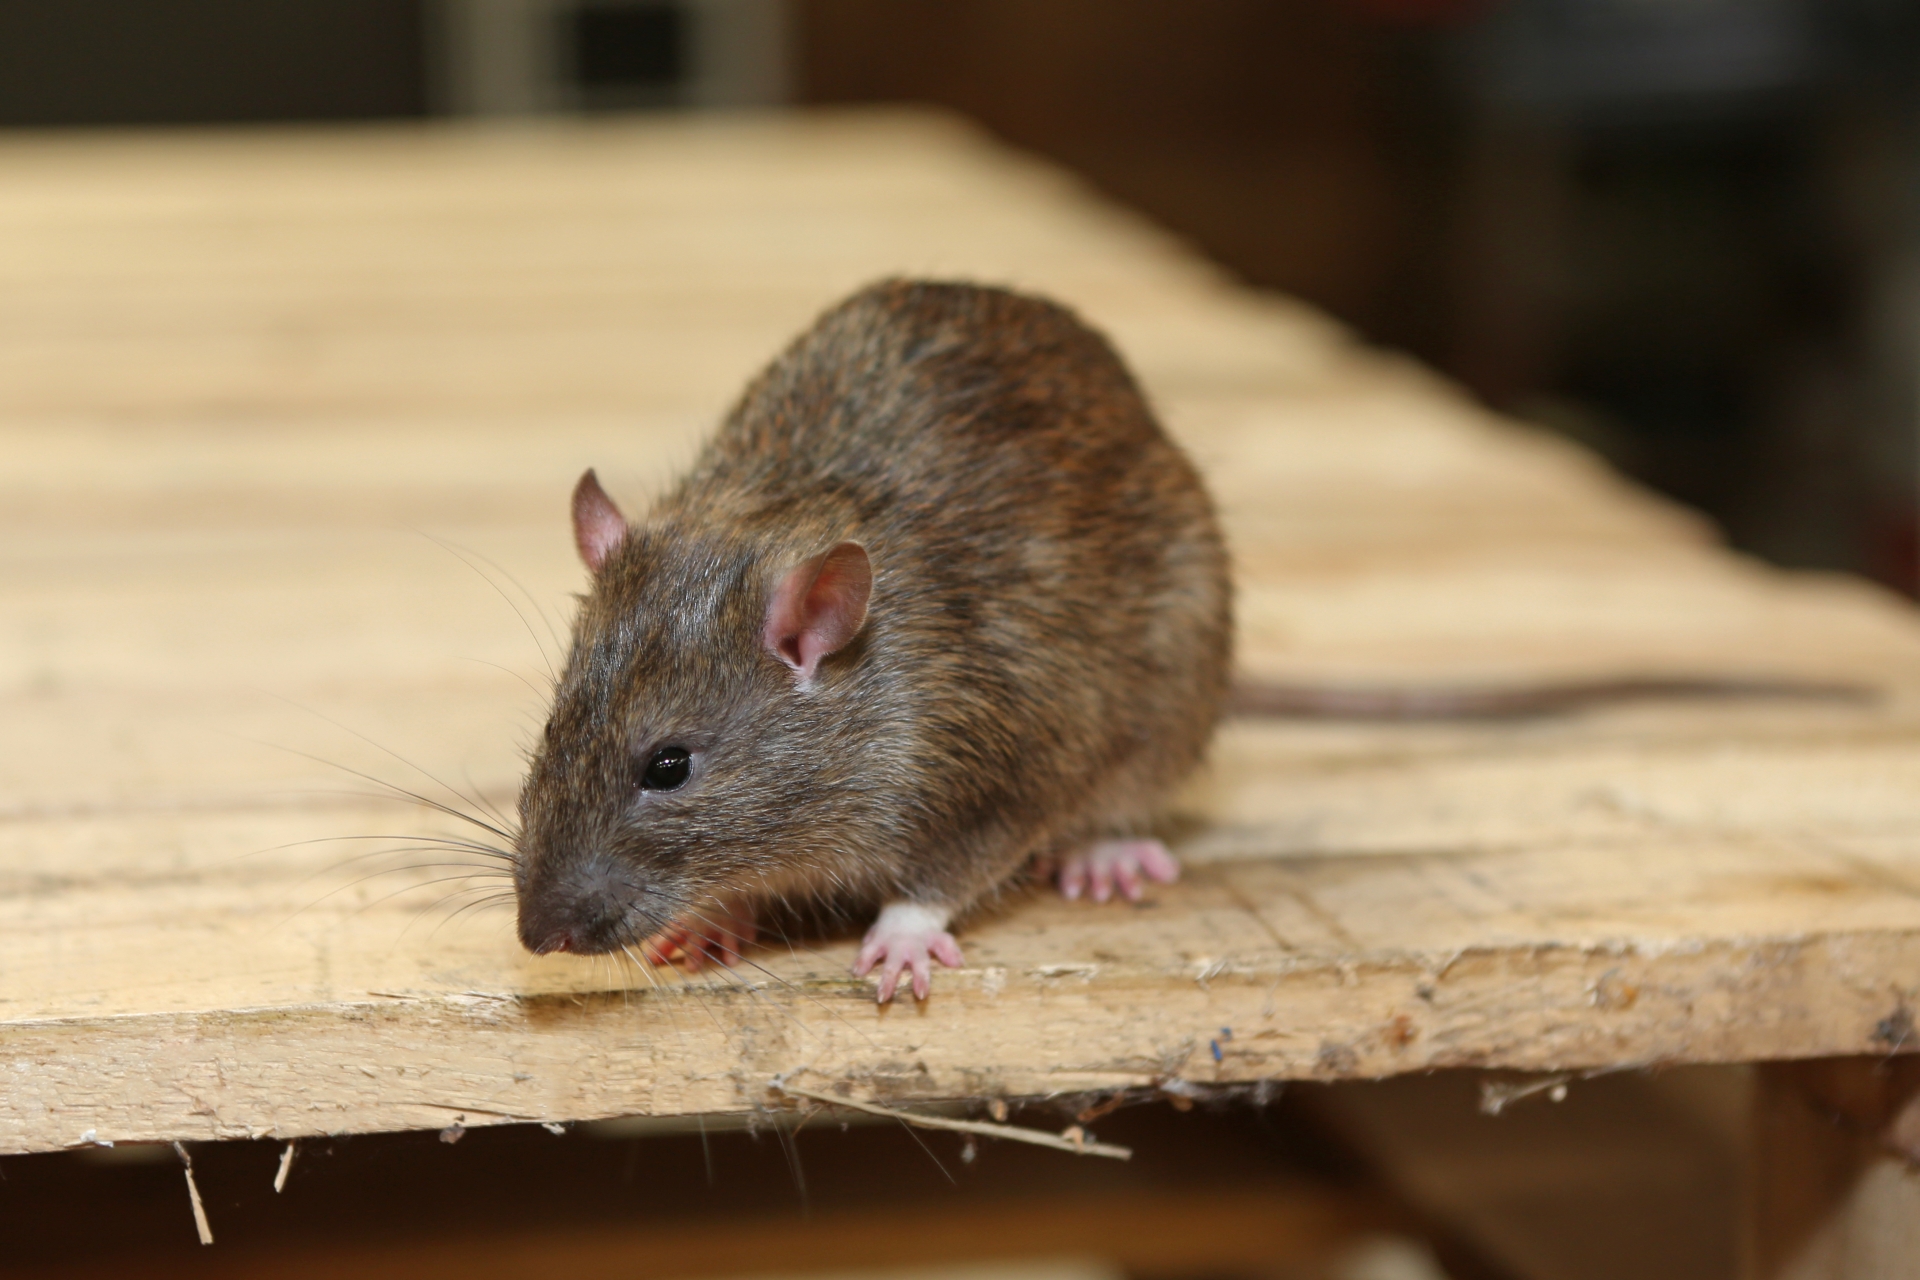 Rat extermination, Pest Control in Deptford, SE8. Call Now 020 8166 9746